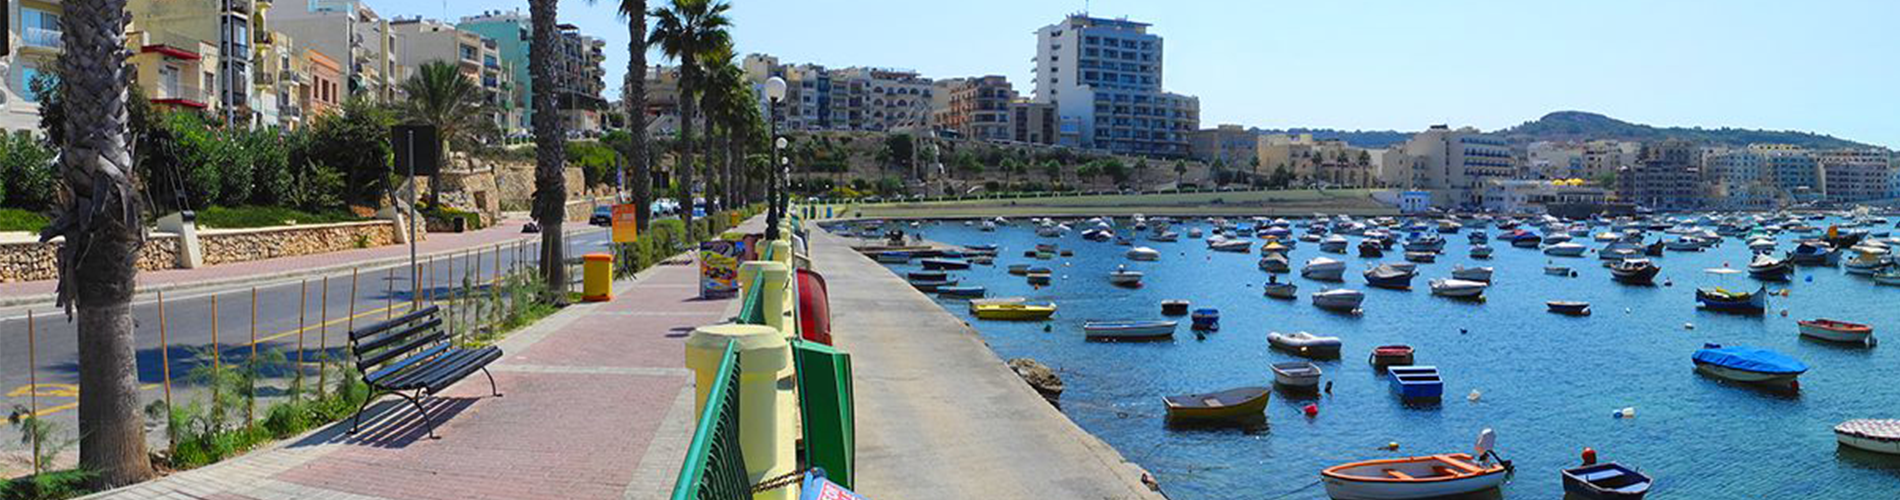 St.-Paul's-Bay-Malta